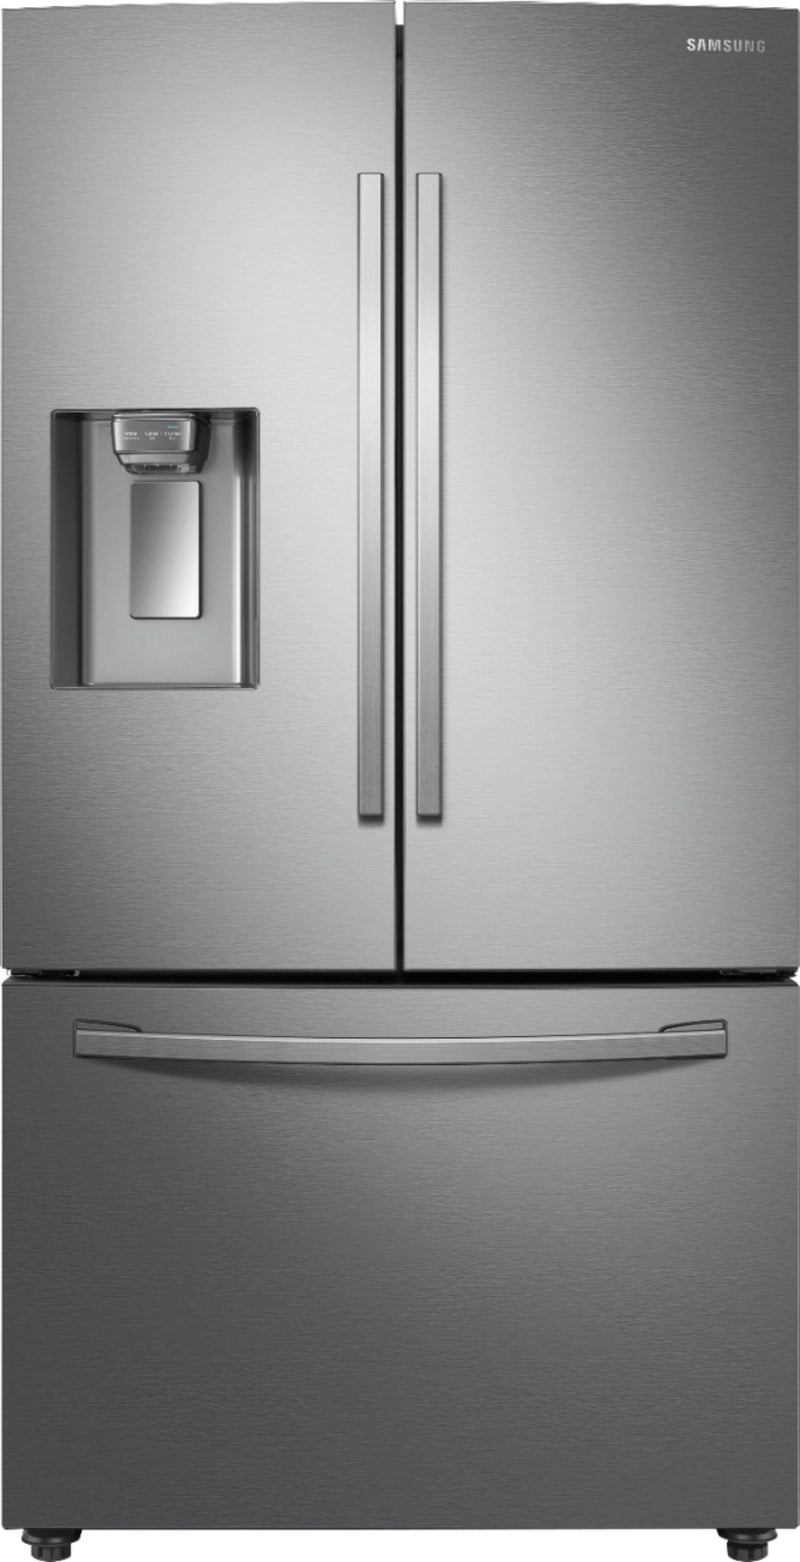 Samsung RF23R6201SR 23 cu. ft. French Door Refrigerator